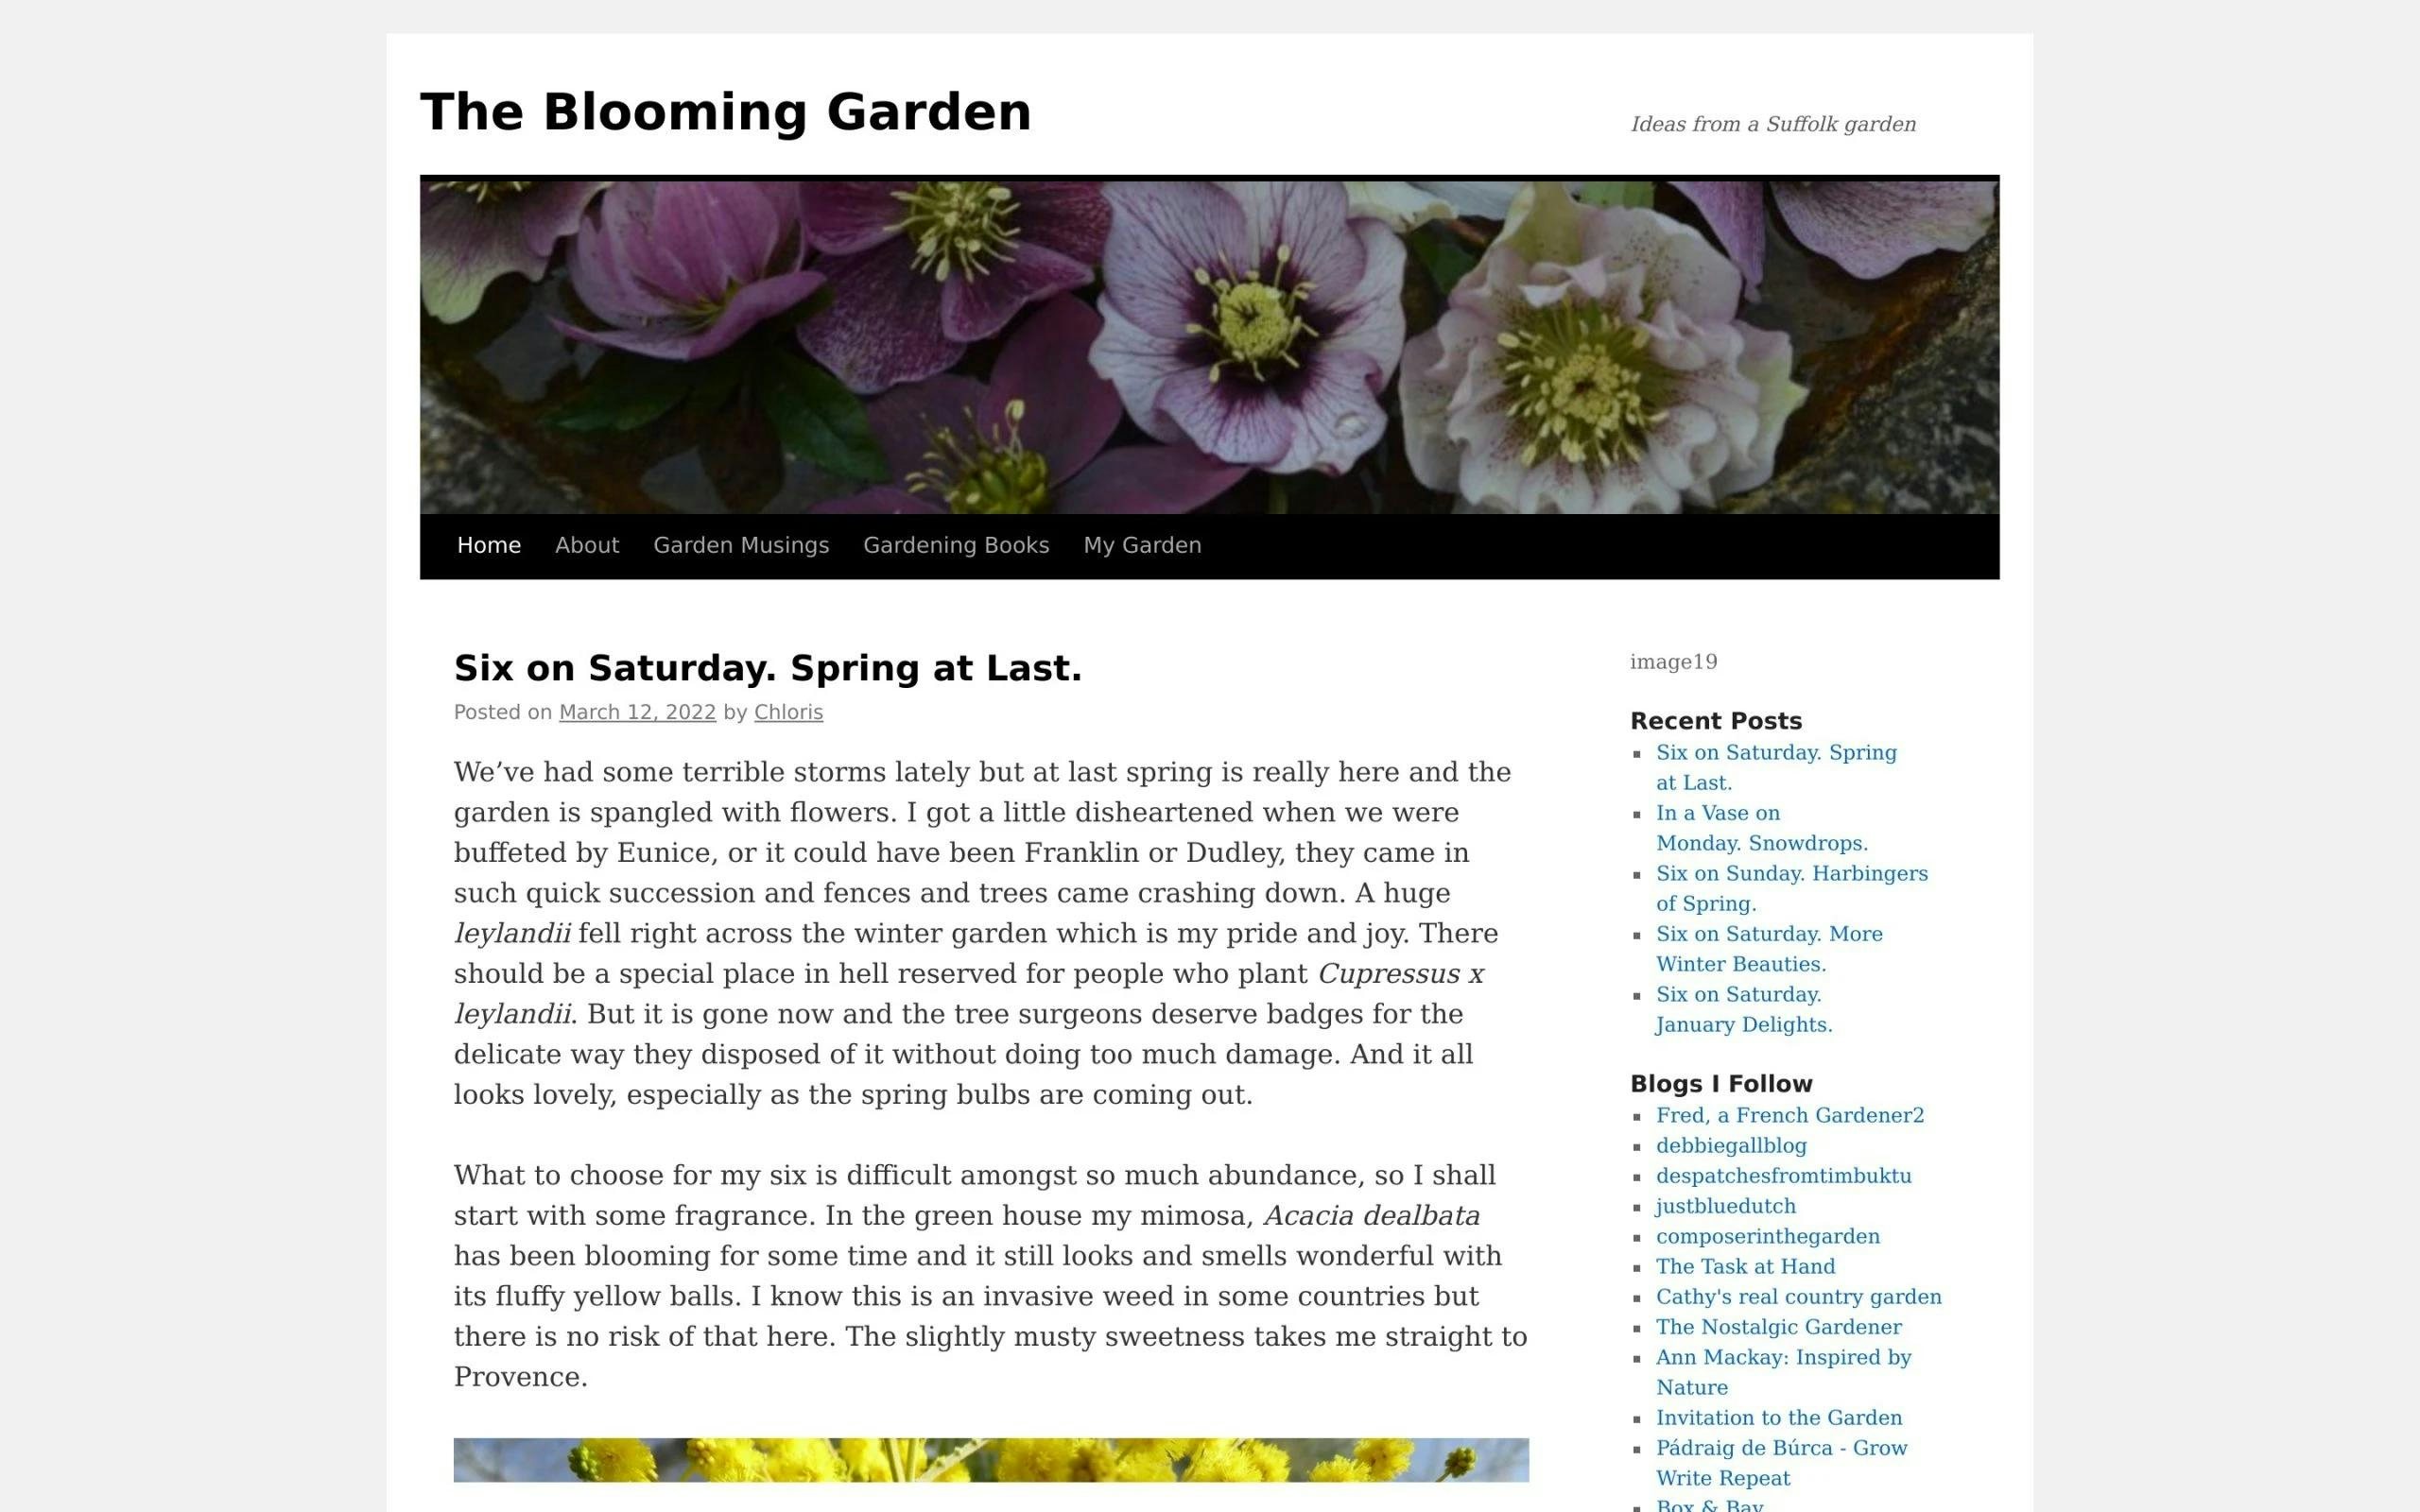 The Blooming Garden gardening blog